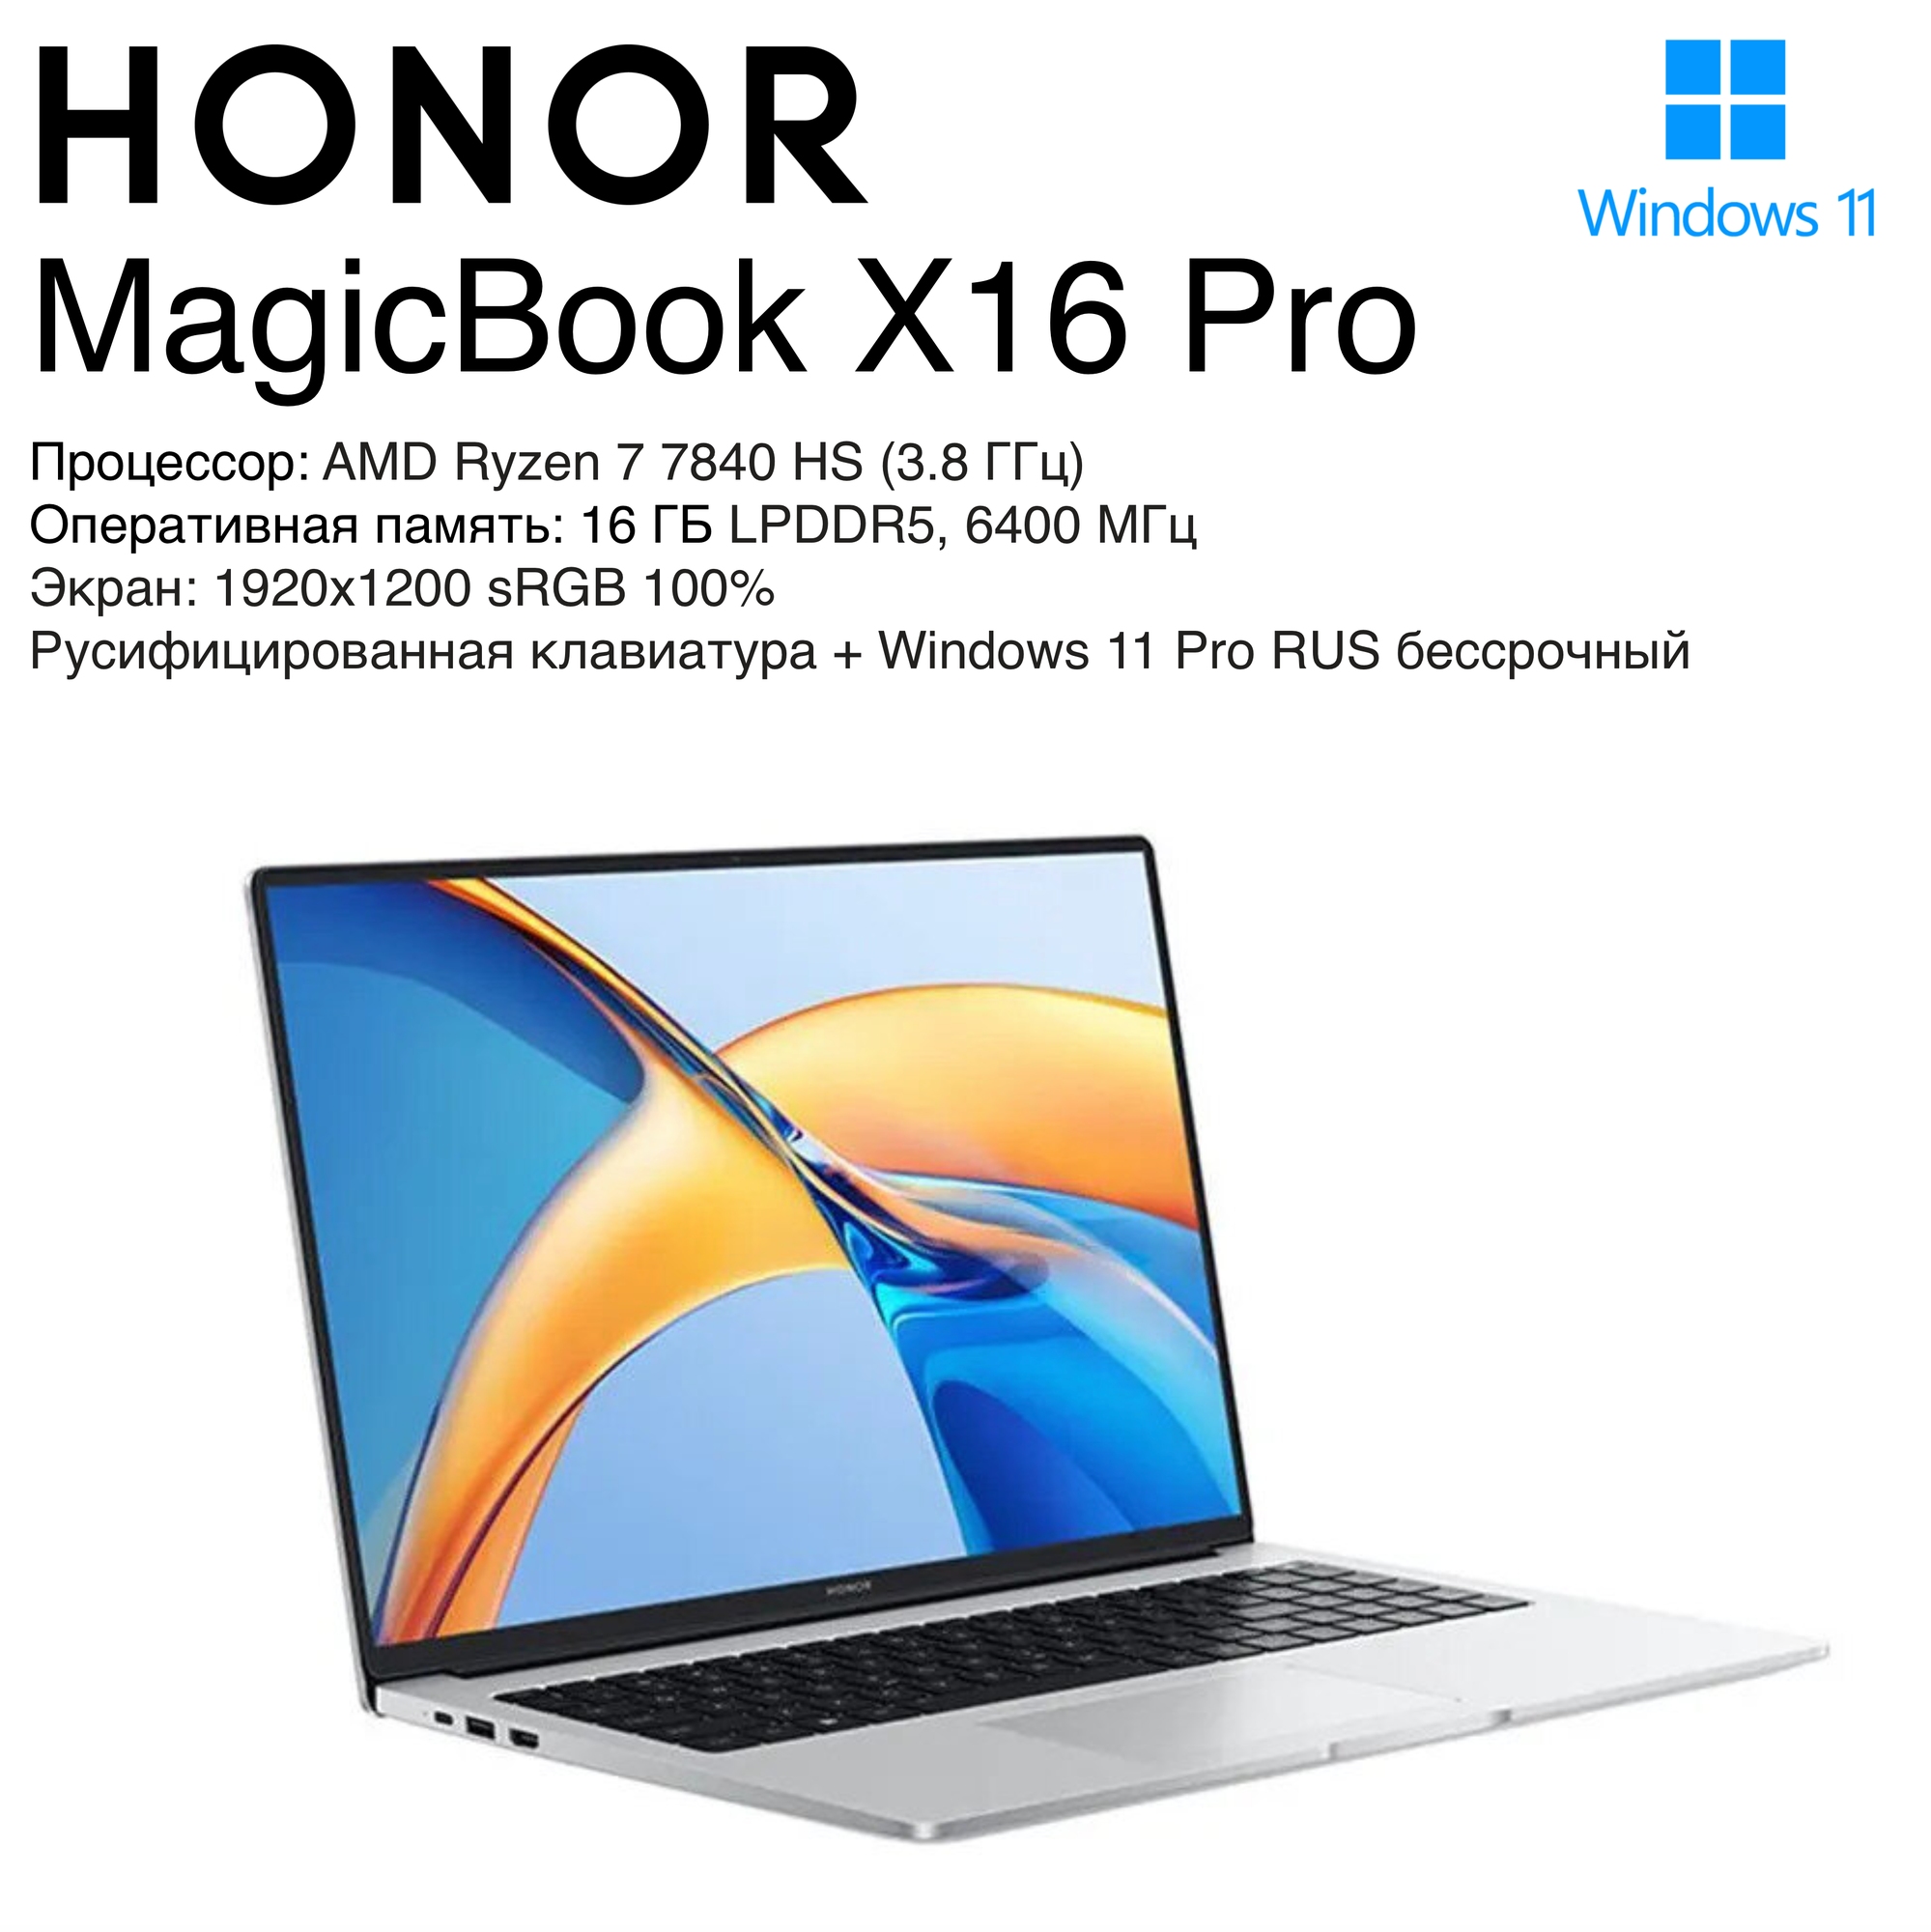 16" Ноутбук Honor MagicBook X16 Pro, 1920x1200 IPS, AMD Ryzen 7 7840HS (3.8 ГГц), RAM 16 ГБ LPDDR5, SSD 512 ГБ, AMD Radeon 780M, Windows 11 Pro RUS, Русская клавиатура